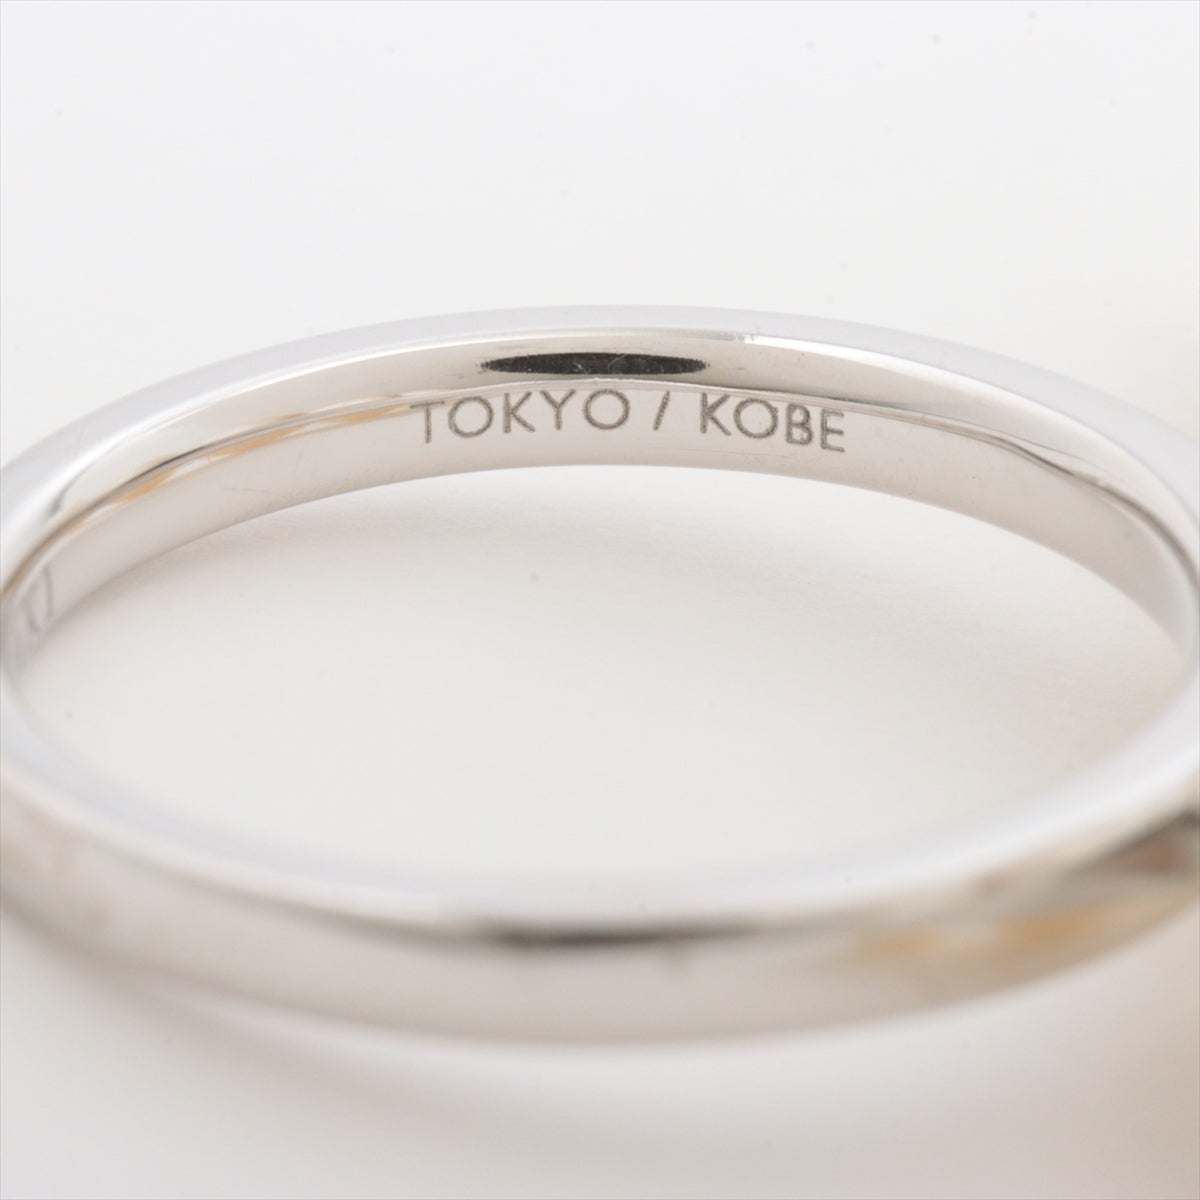 TASAKI Balance Signature Pearl rings 750(WG) 8.8g Approx. 8.0 mm to 8.5 mm